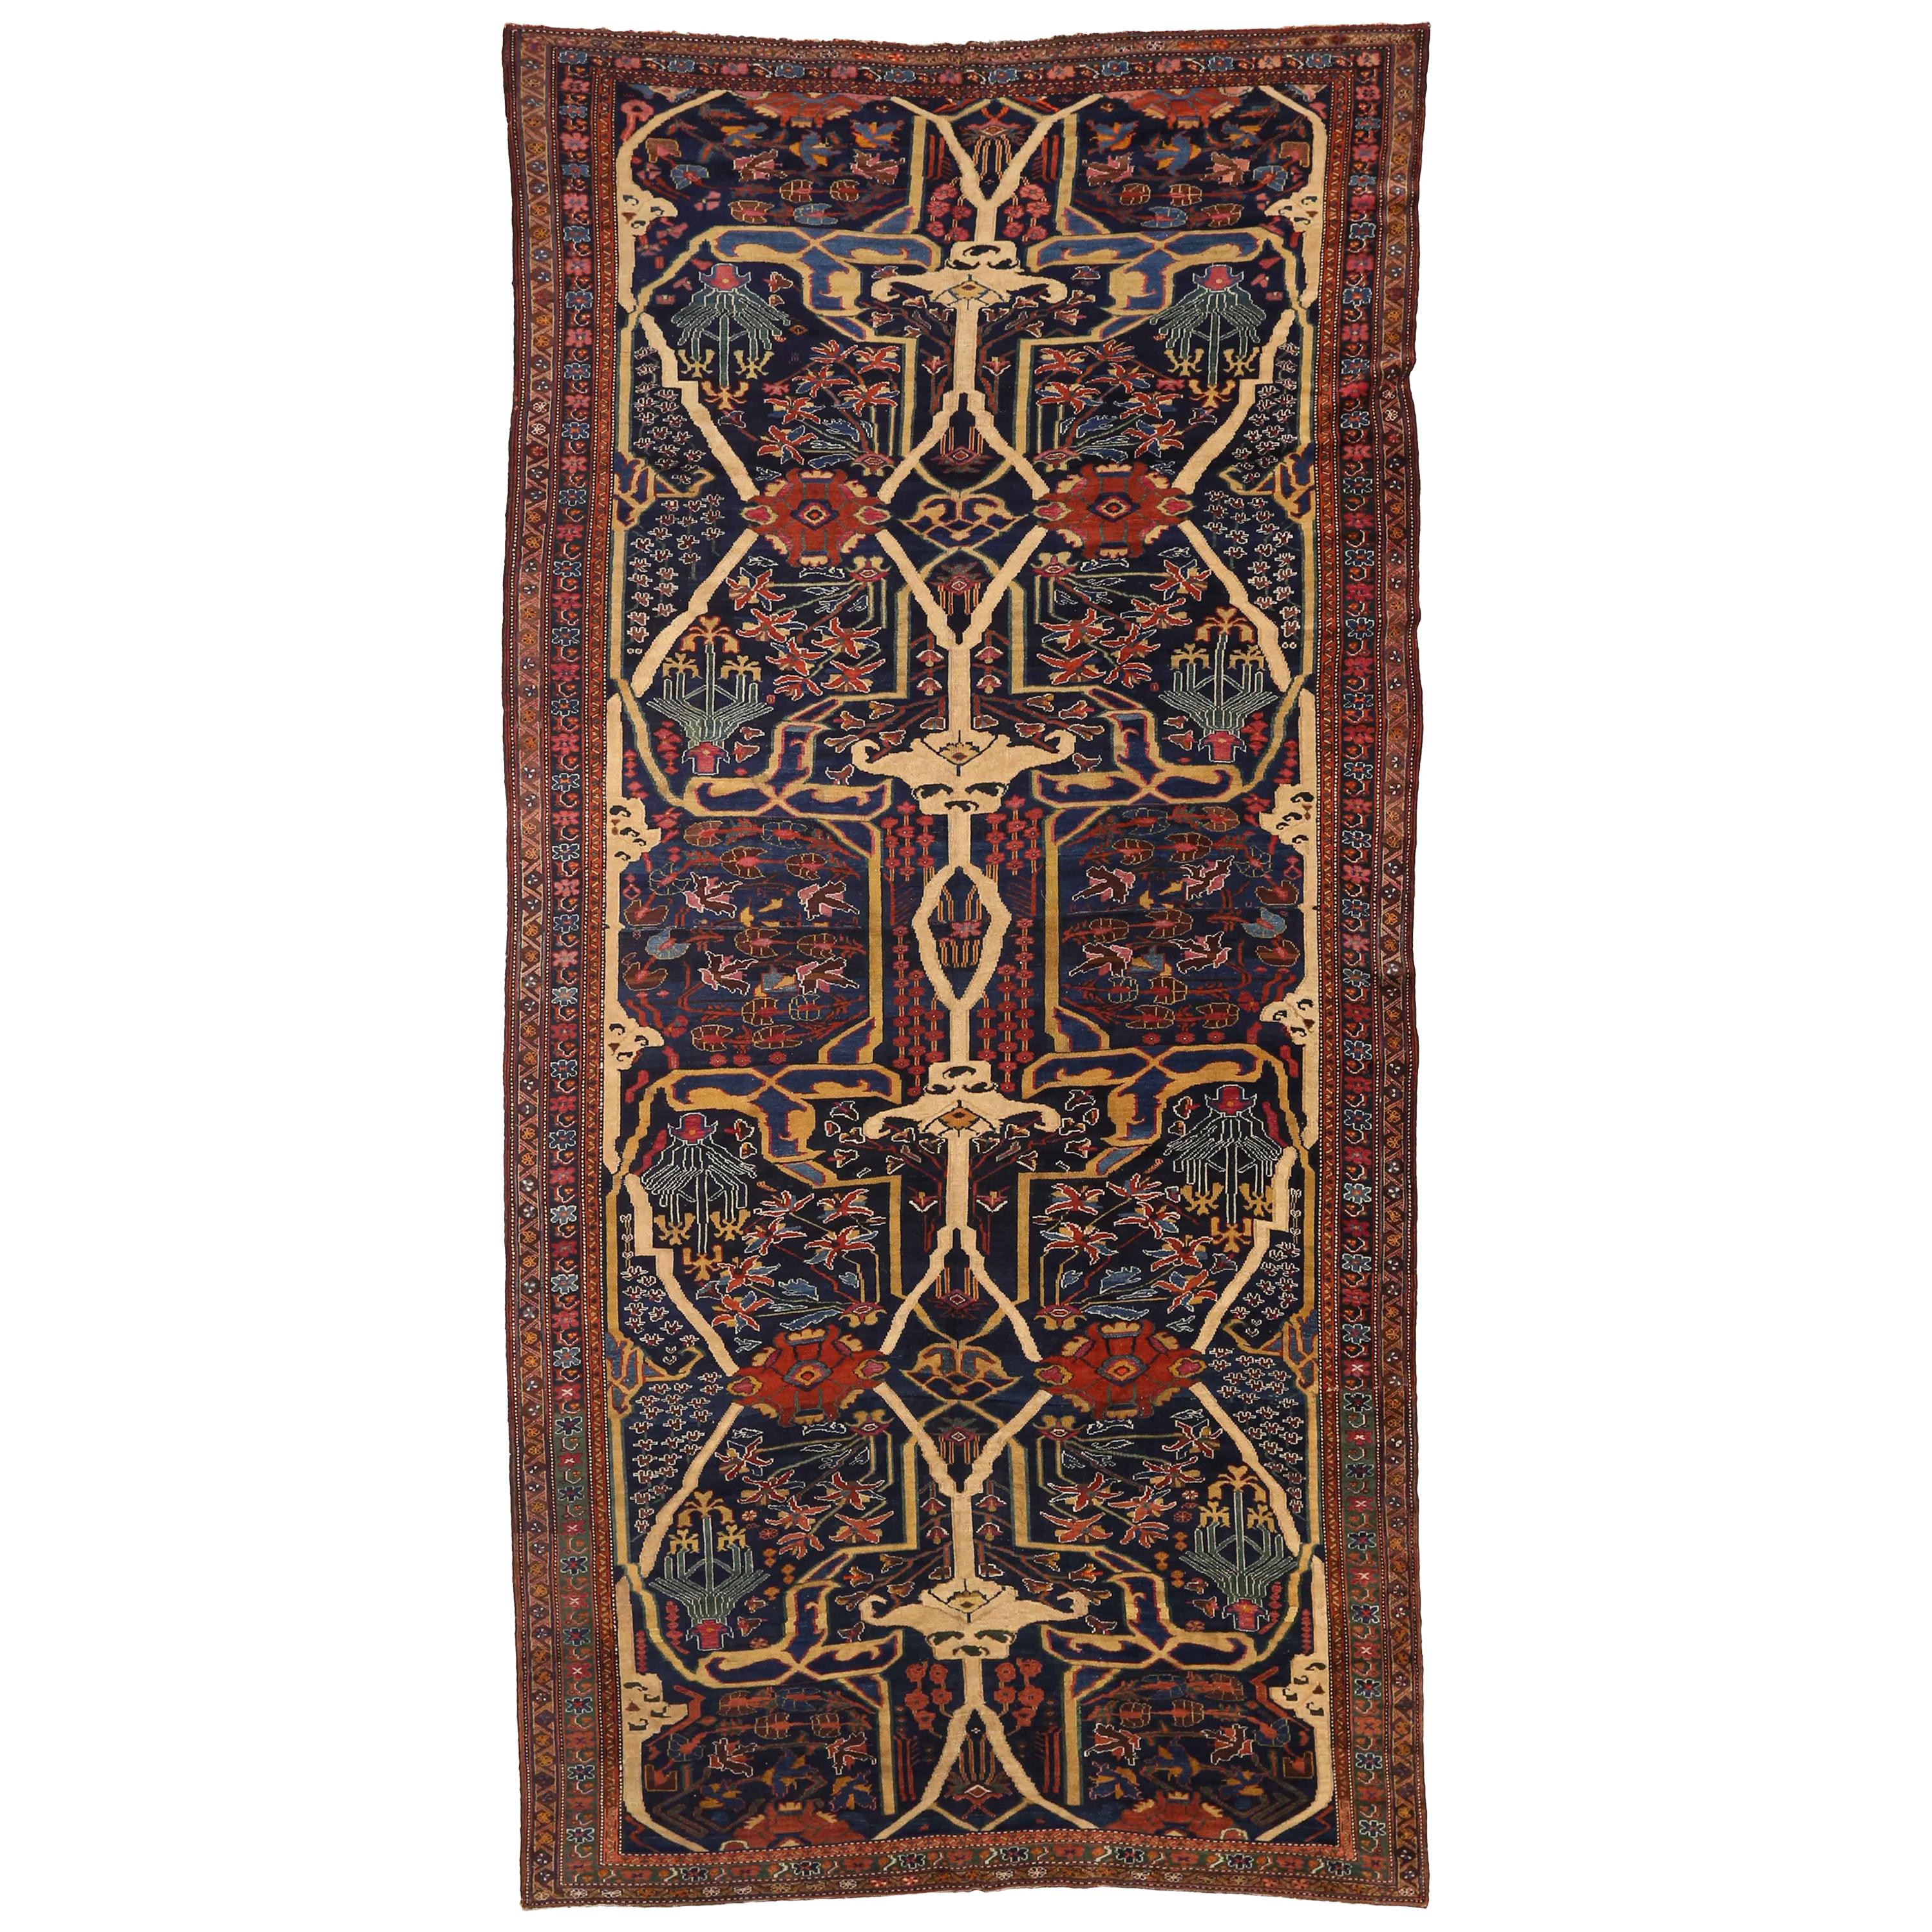 Antique Persian Rug Bijar Design with Multicolored Floral Patterns, circa 1920s